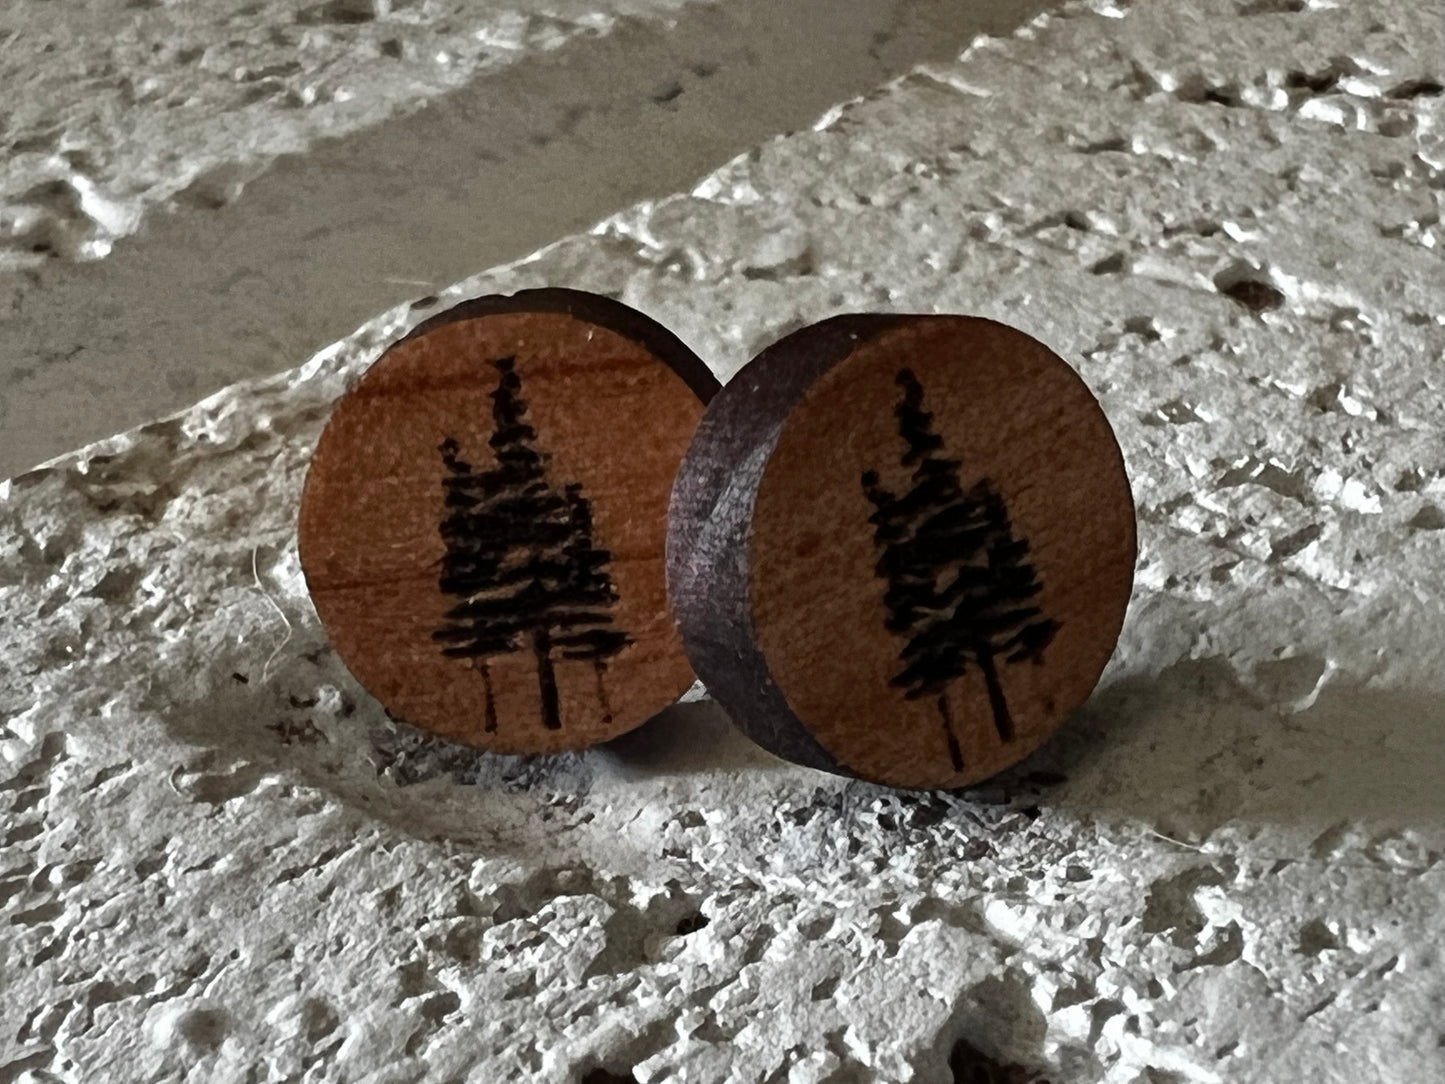 Three Tree Earrings